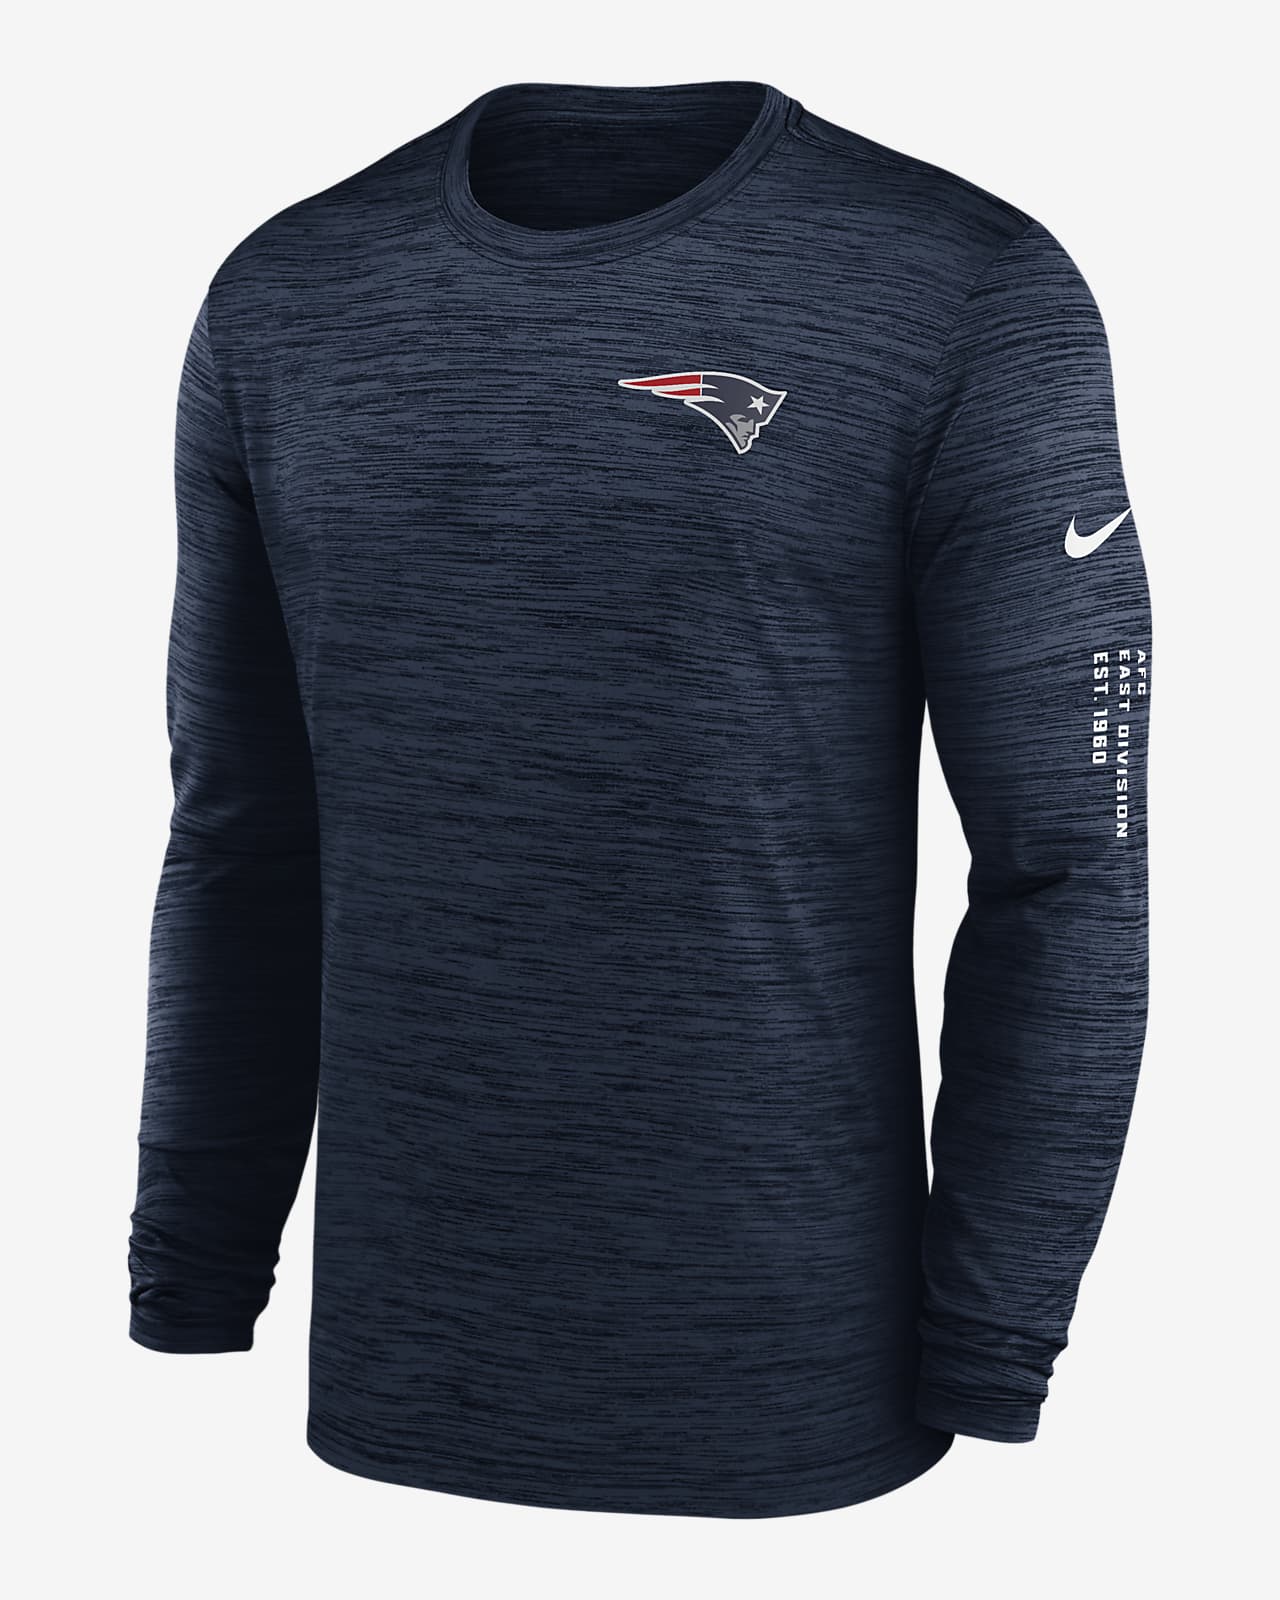 Nike Dri-FIT Sideline Coach (NFL New England Patriots) Men's Long-Sleeve Top